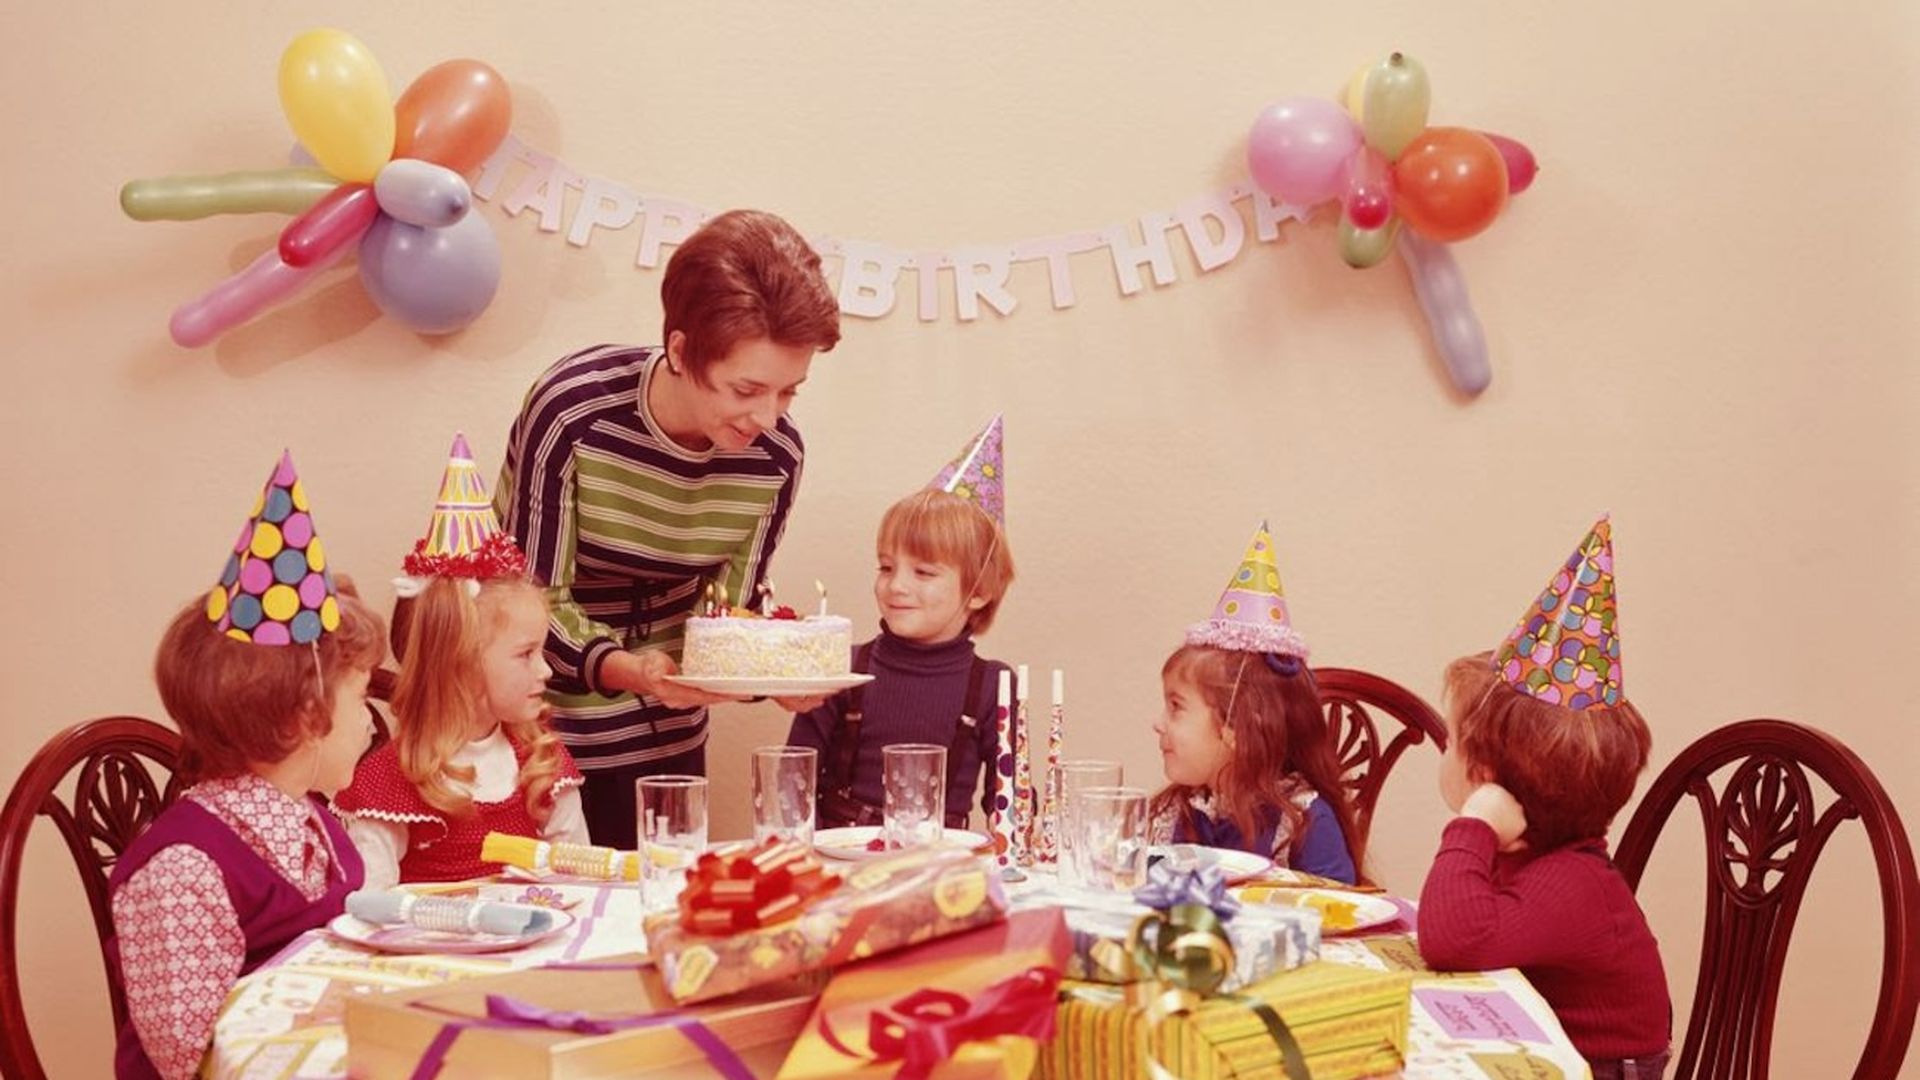 1970s-era birthday party